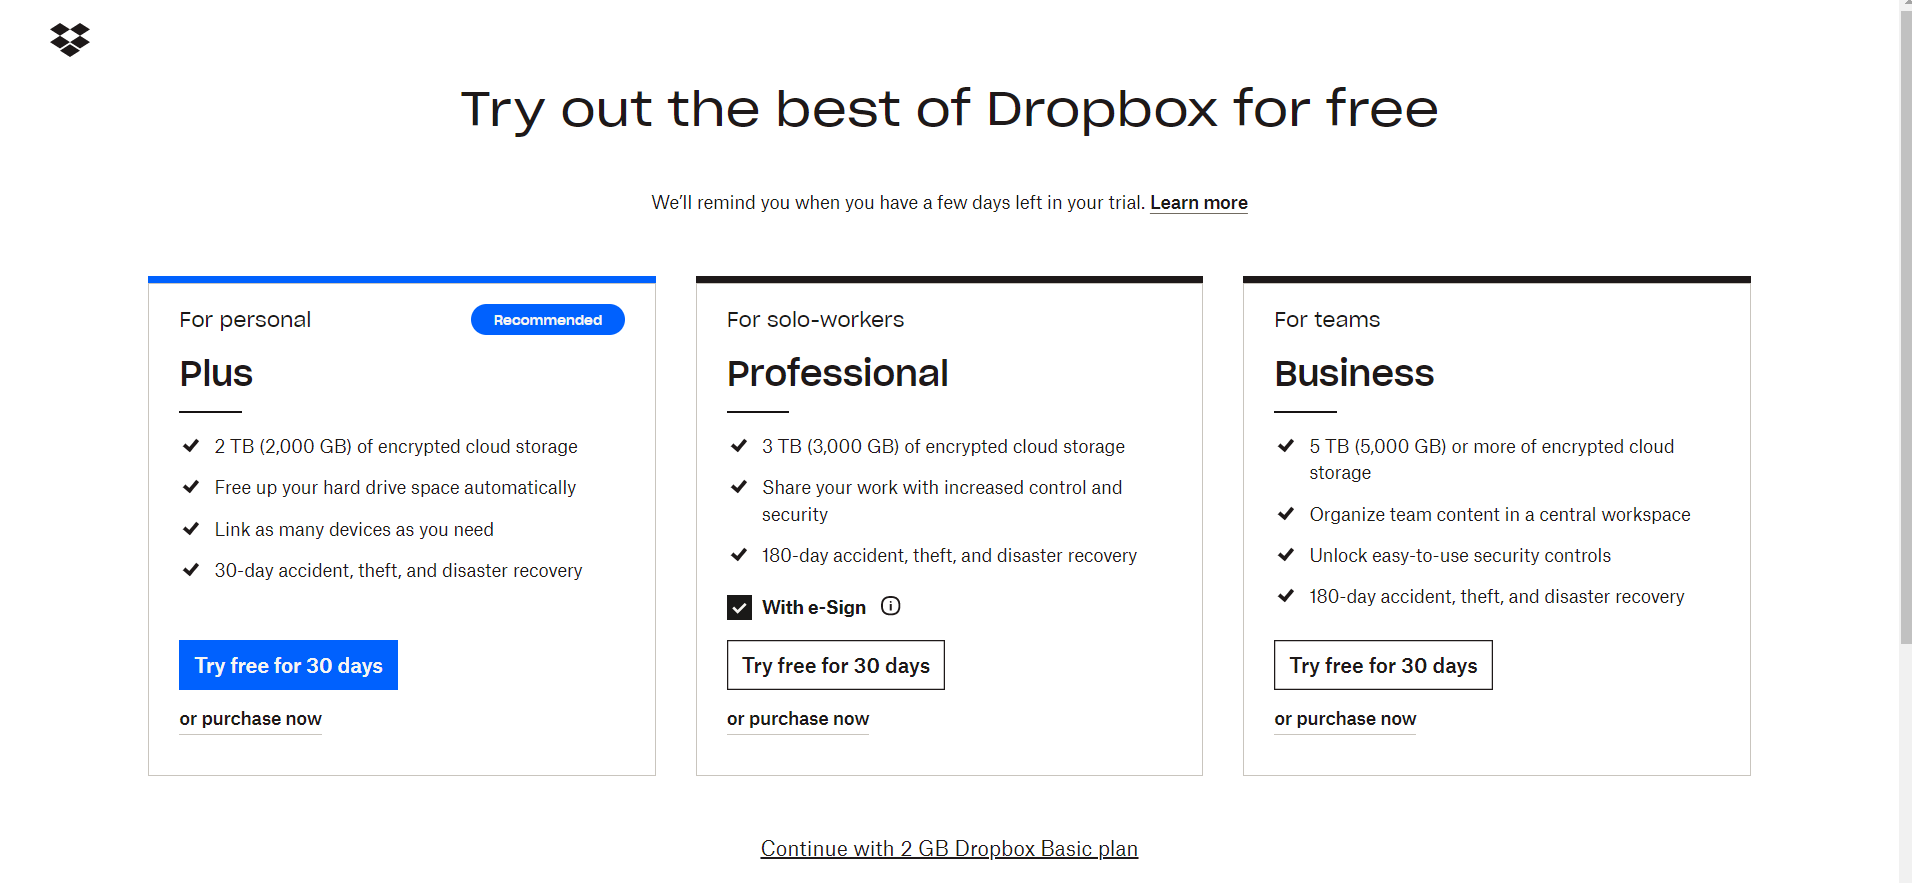 Dropbox free trial length